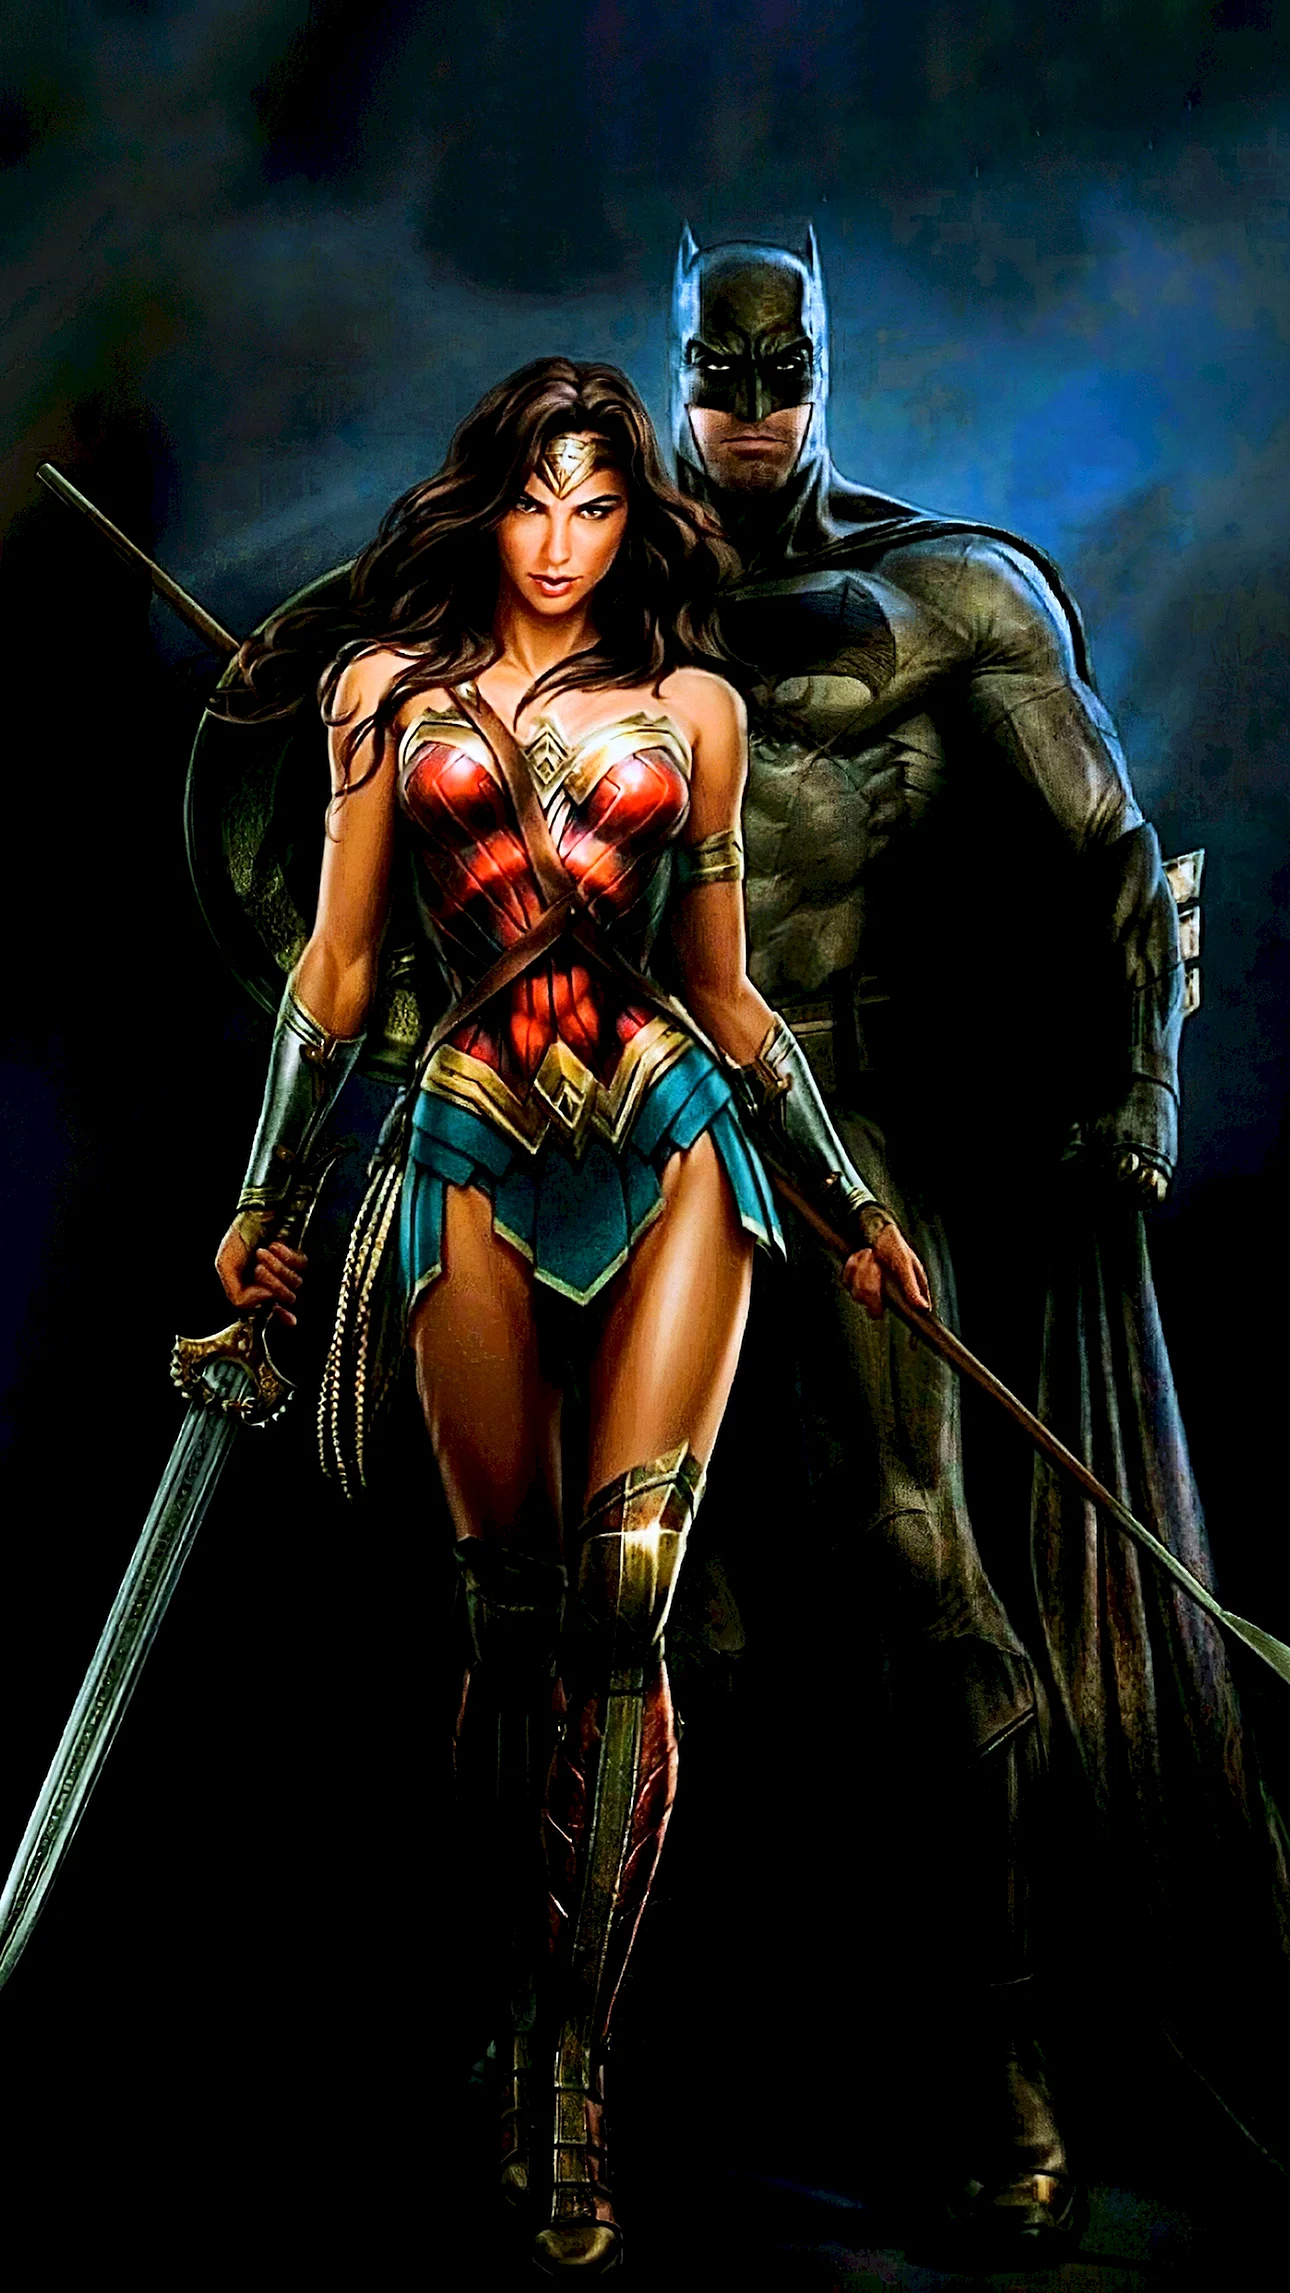 Batman And Wonder Woman Wallpaper For iPhone